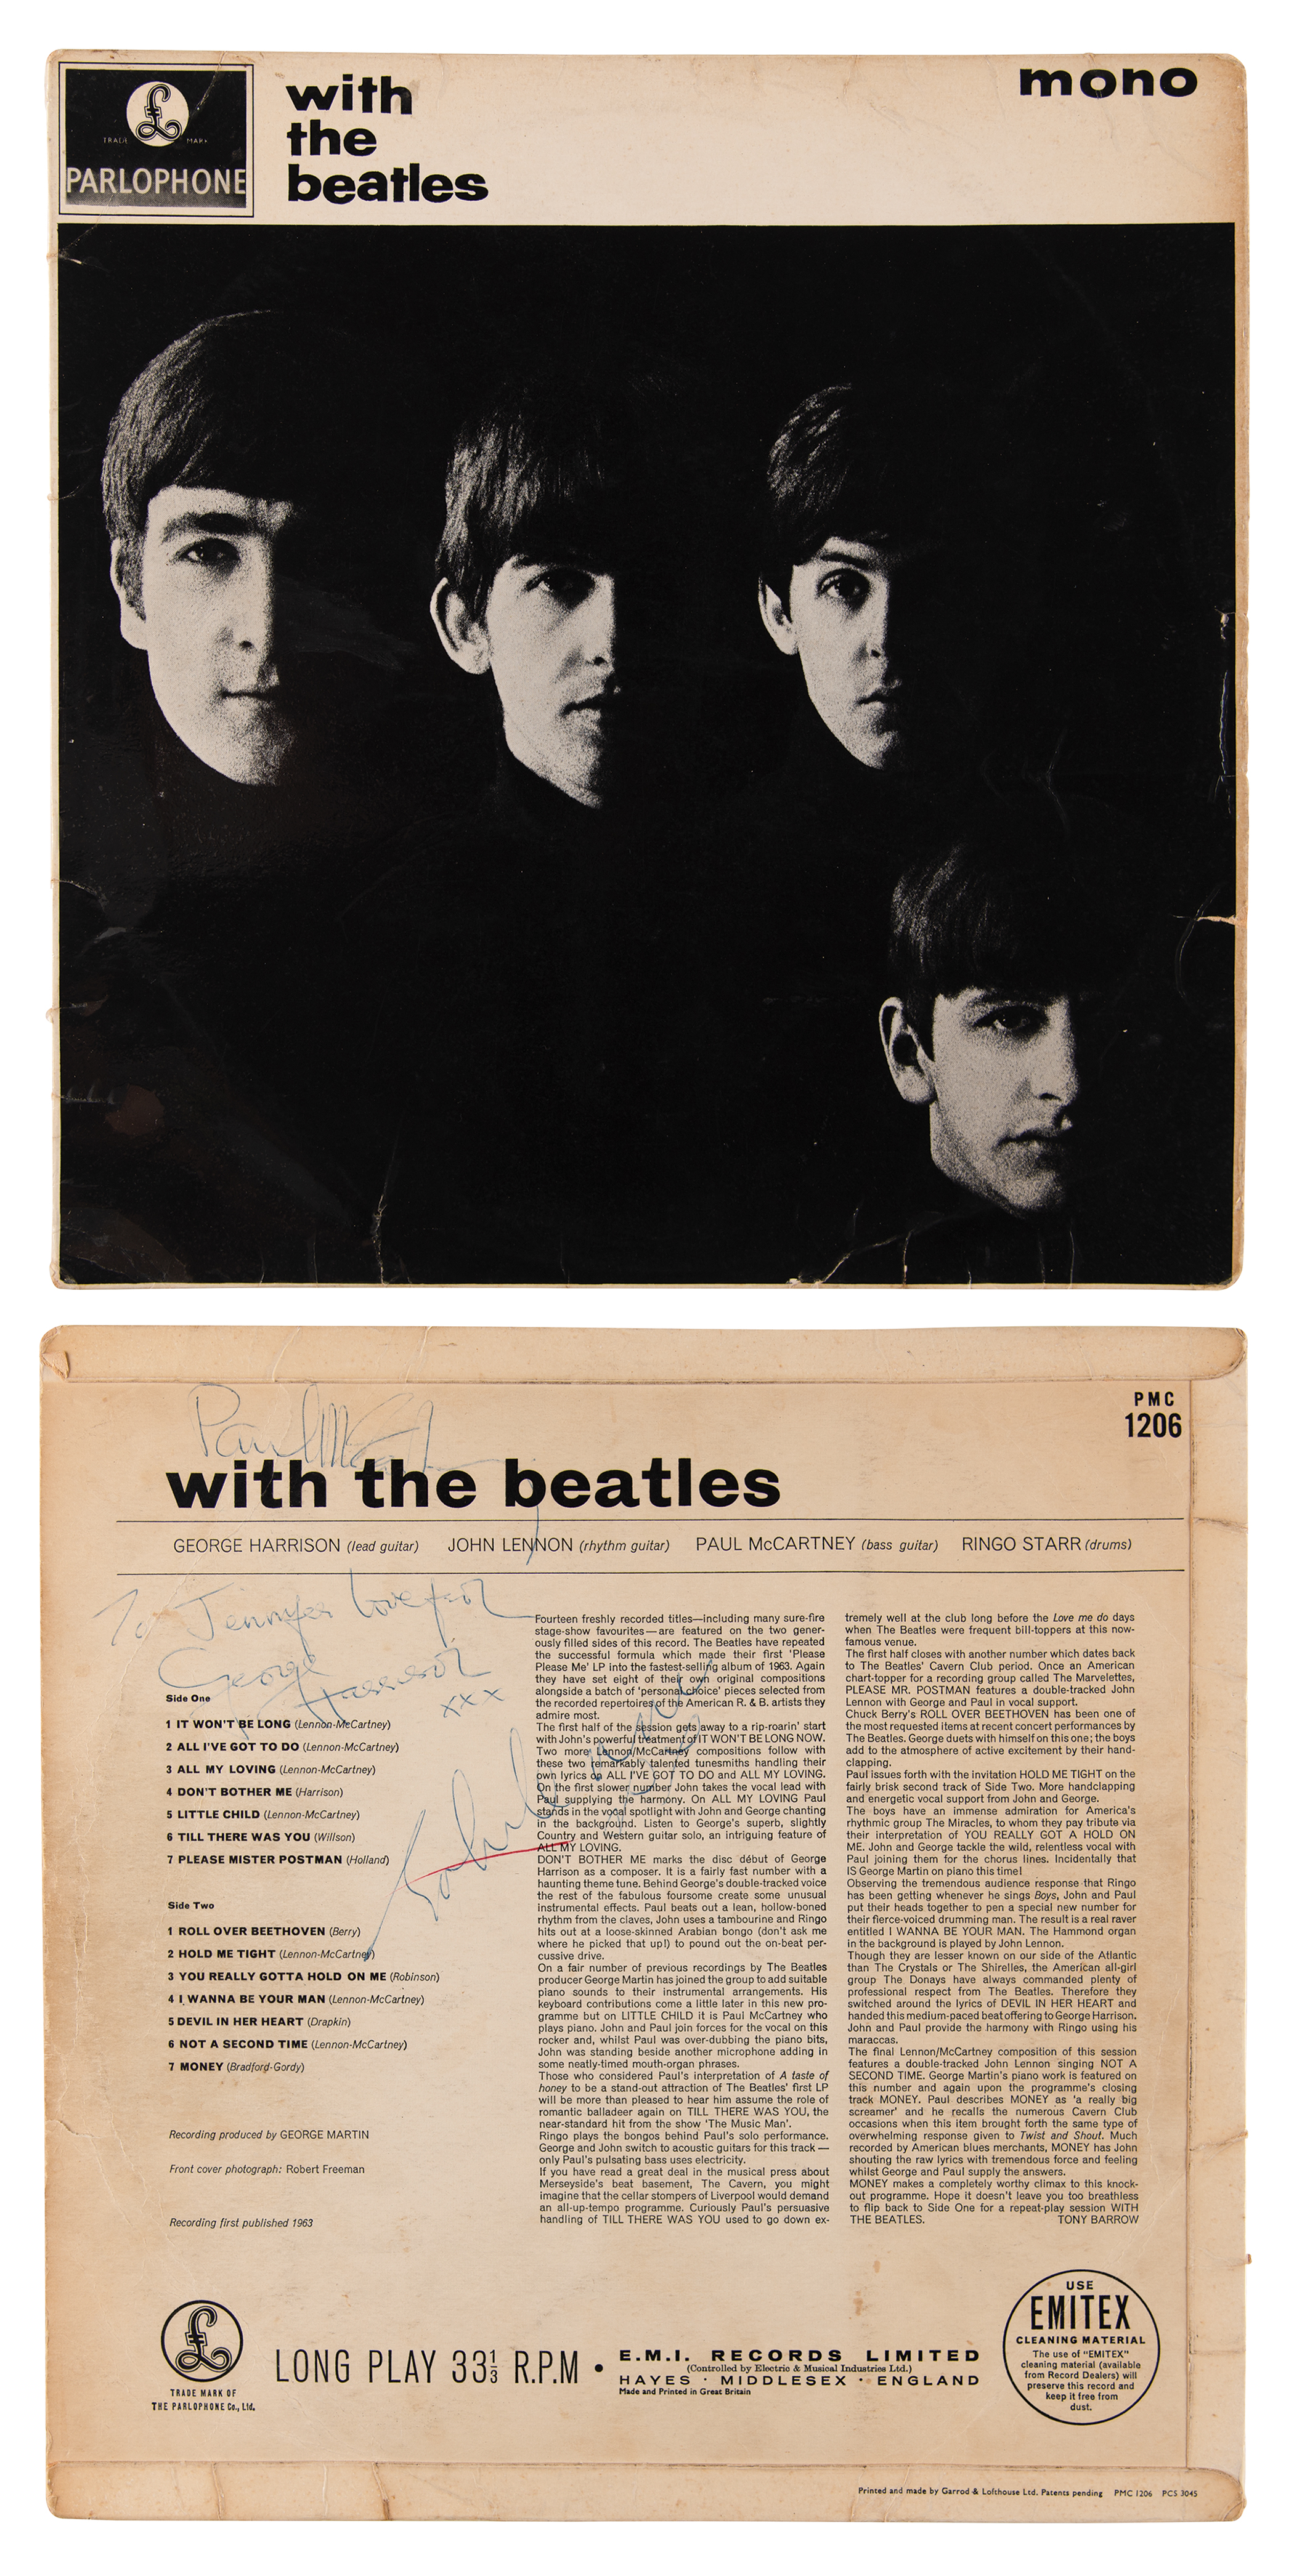 Lot #5013 Beatles Signed Album (Lennon, McCartney, Harrison) - With the Beatles - Image 1